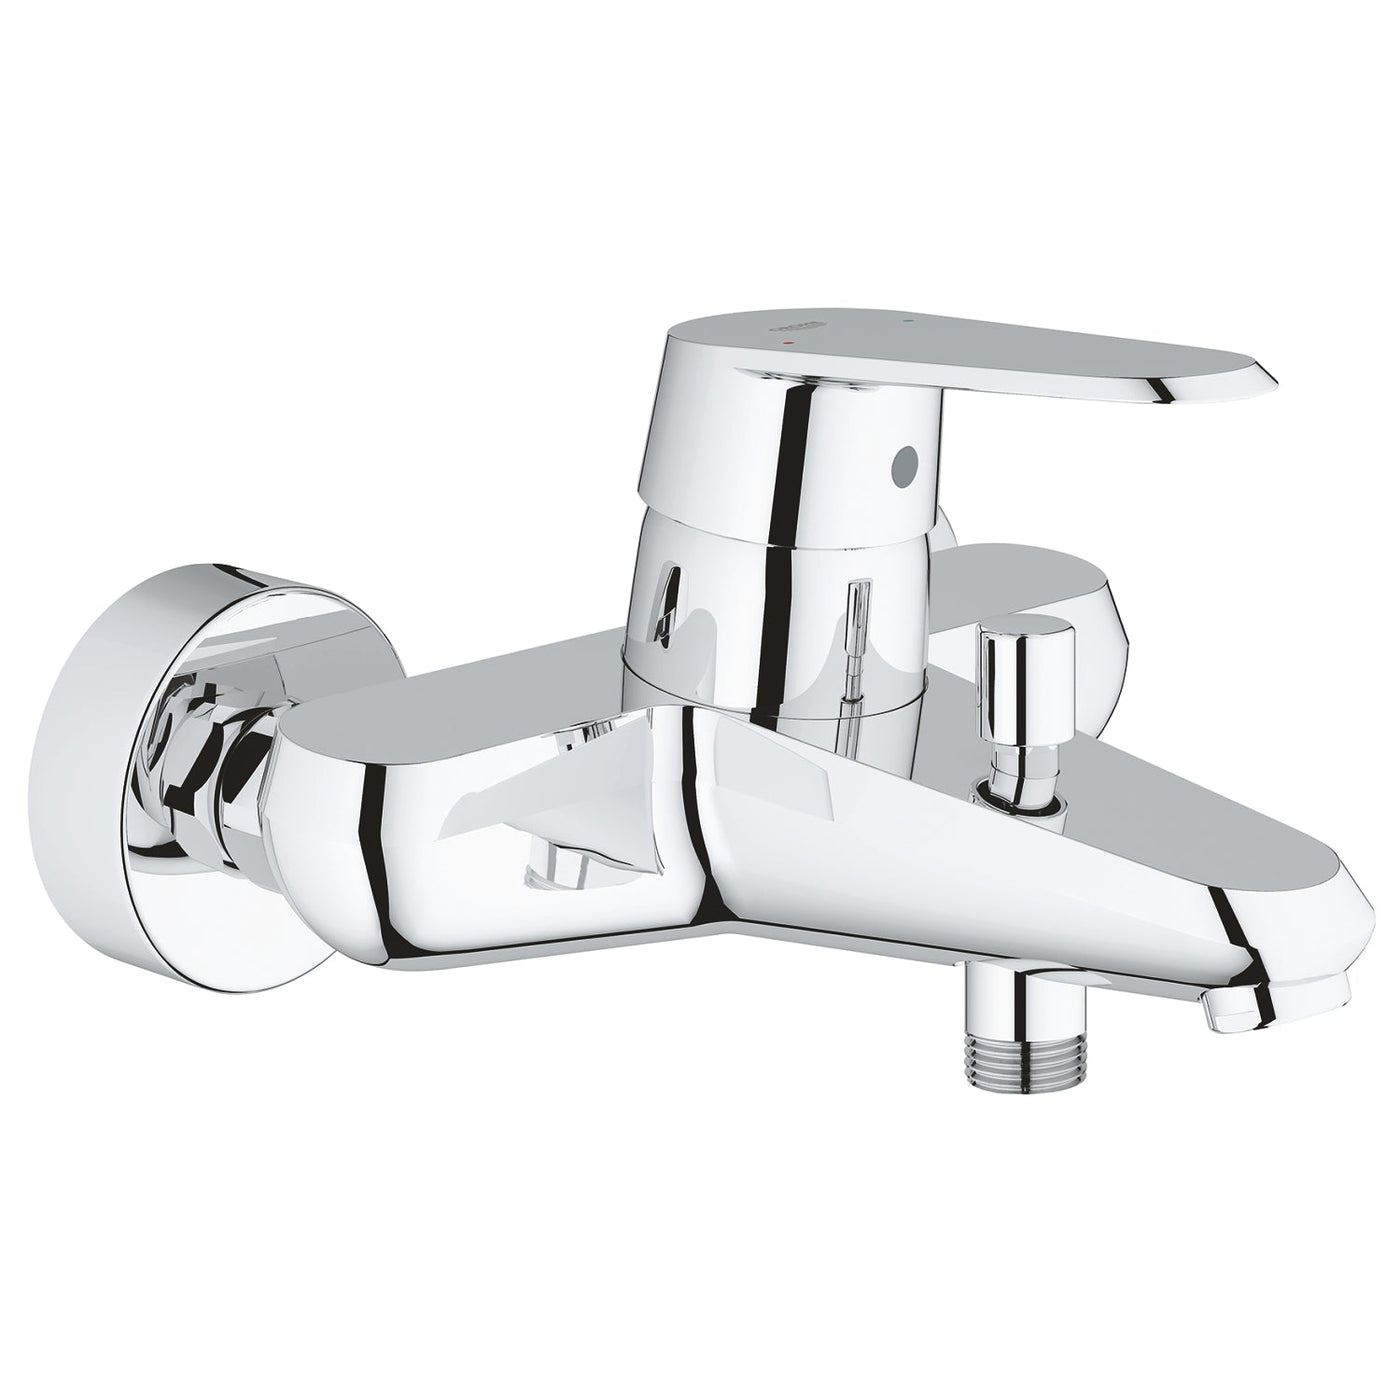 Grohe Wall Mounted Chrome Eurodisc Cosmopolitan Single-lever bath/shower mixer 1/2" - Letta London - 